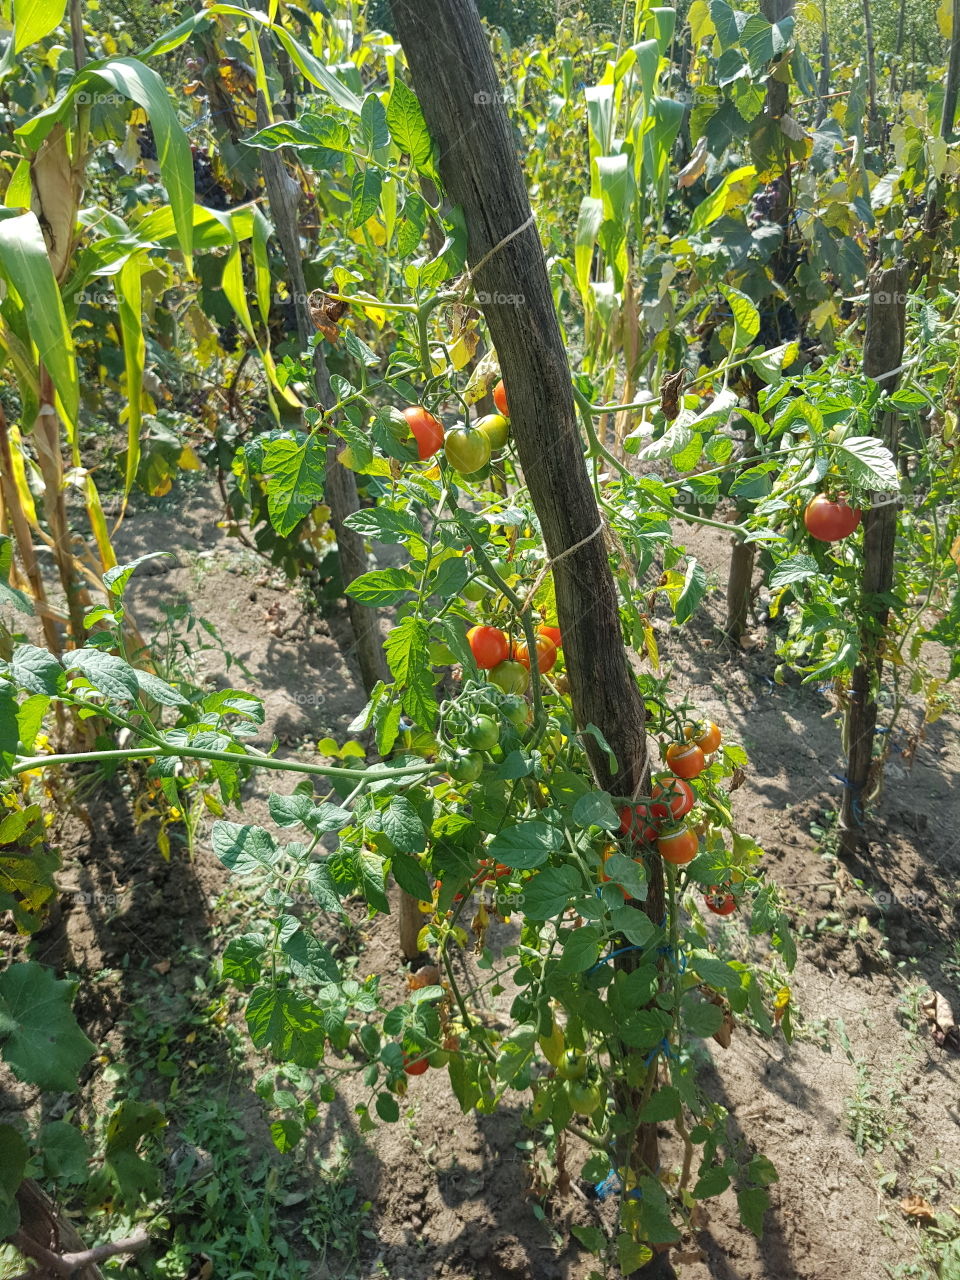 cherry tomatoes on plants in garden